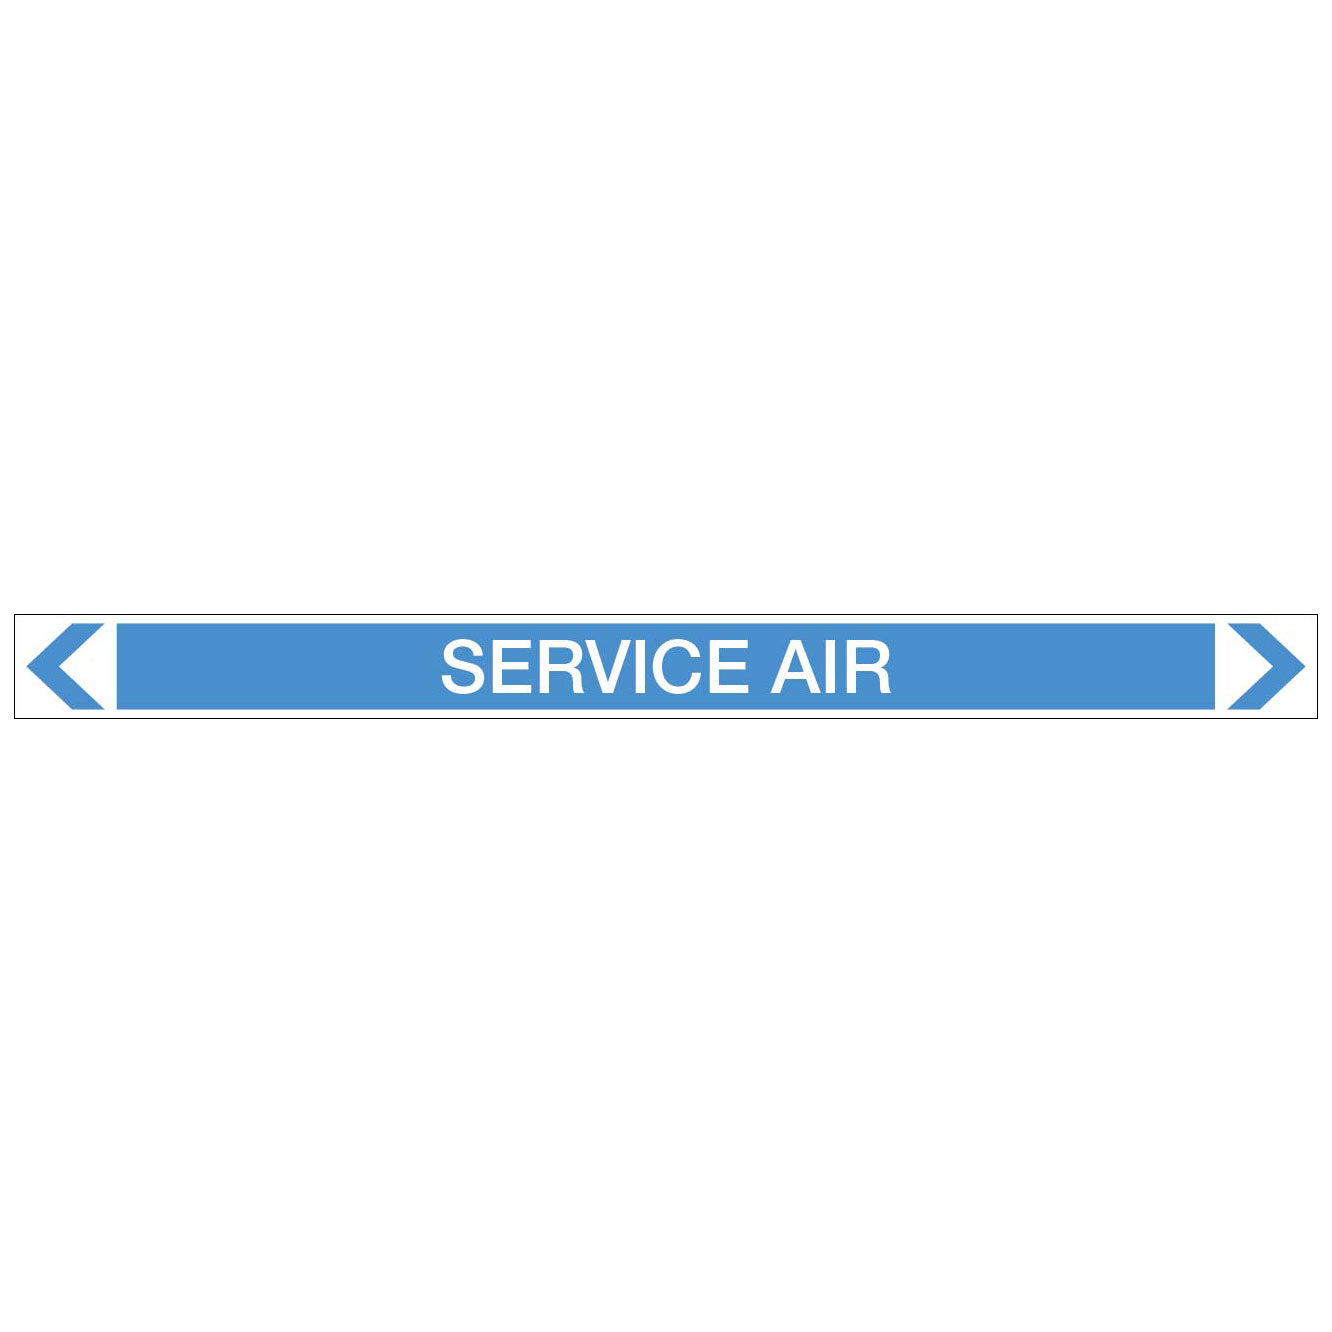 Air - Service Air - Pipe Marker Sticker